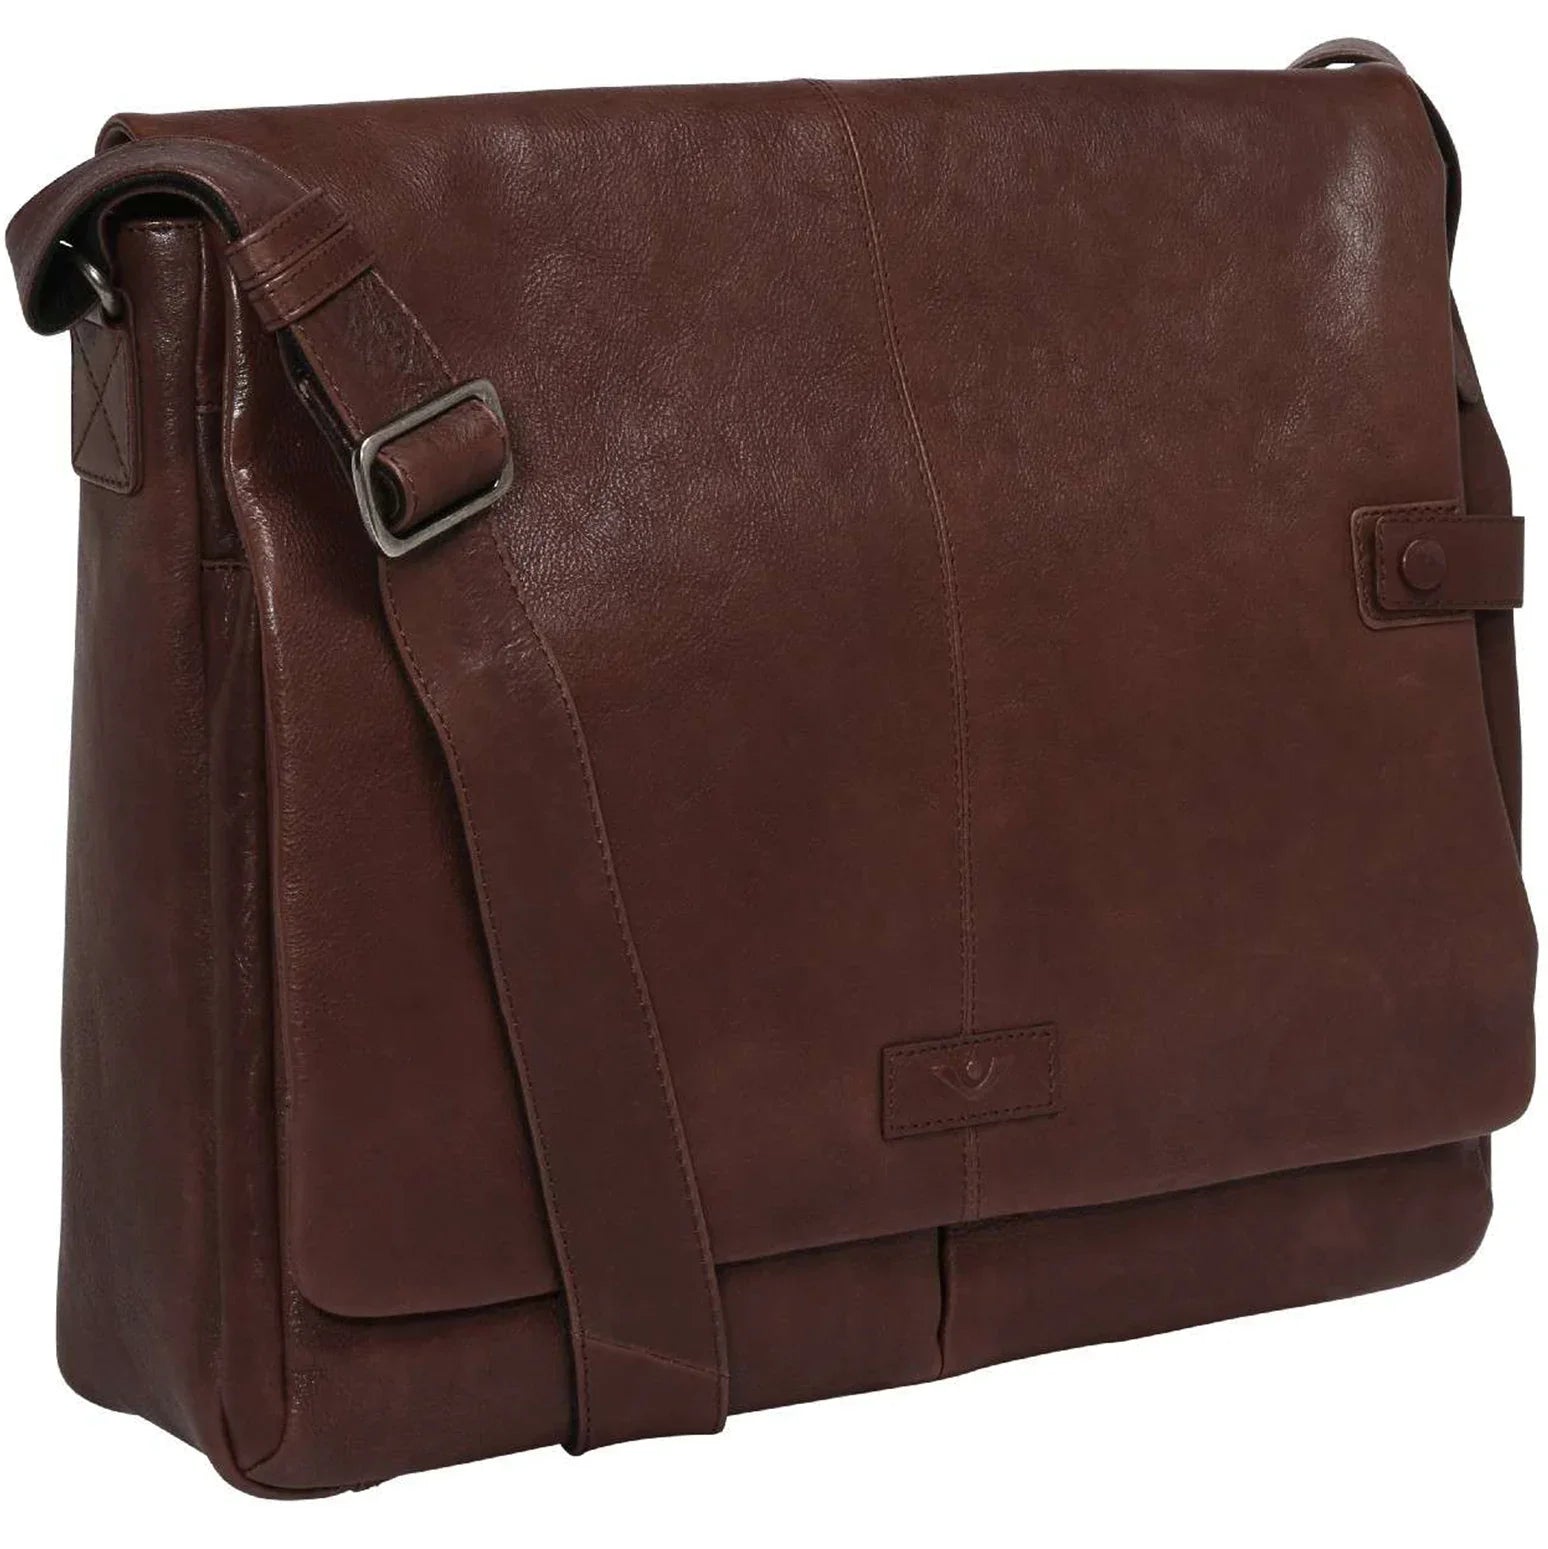 VOi-Design Dakota Filiz shoulder bag 36 cm - Cognac